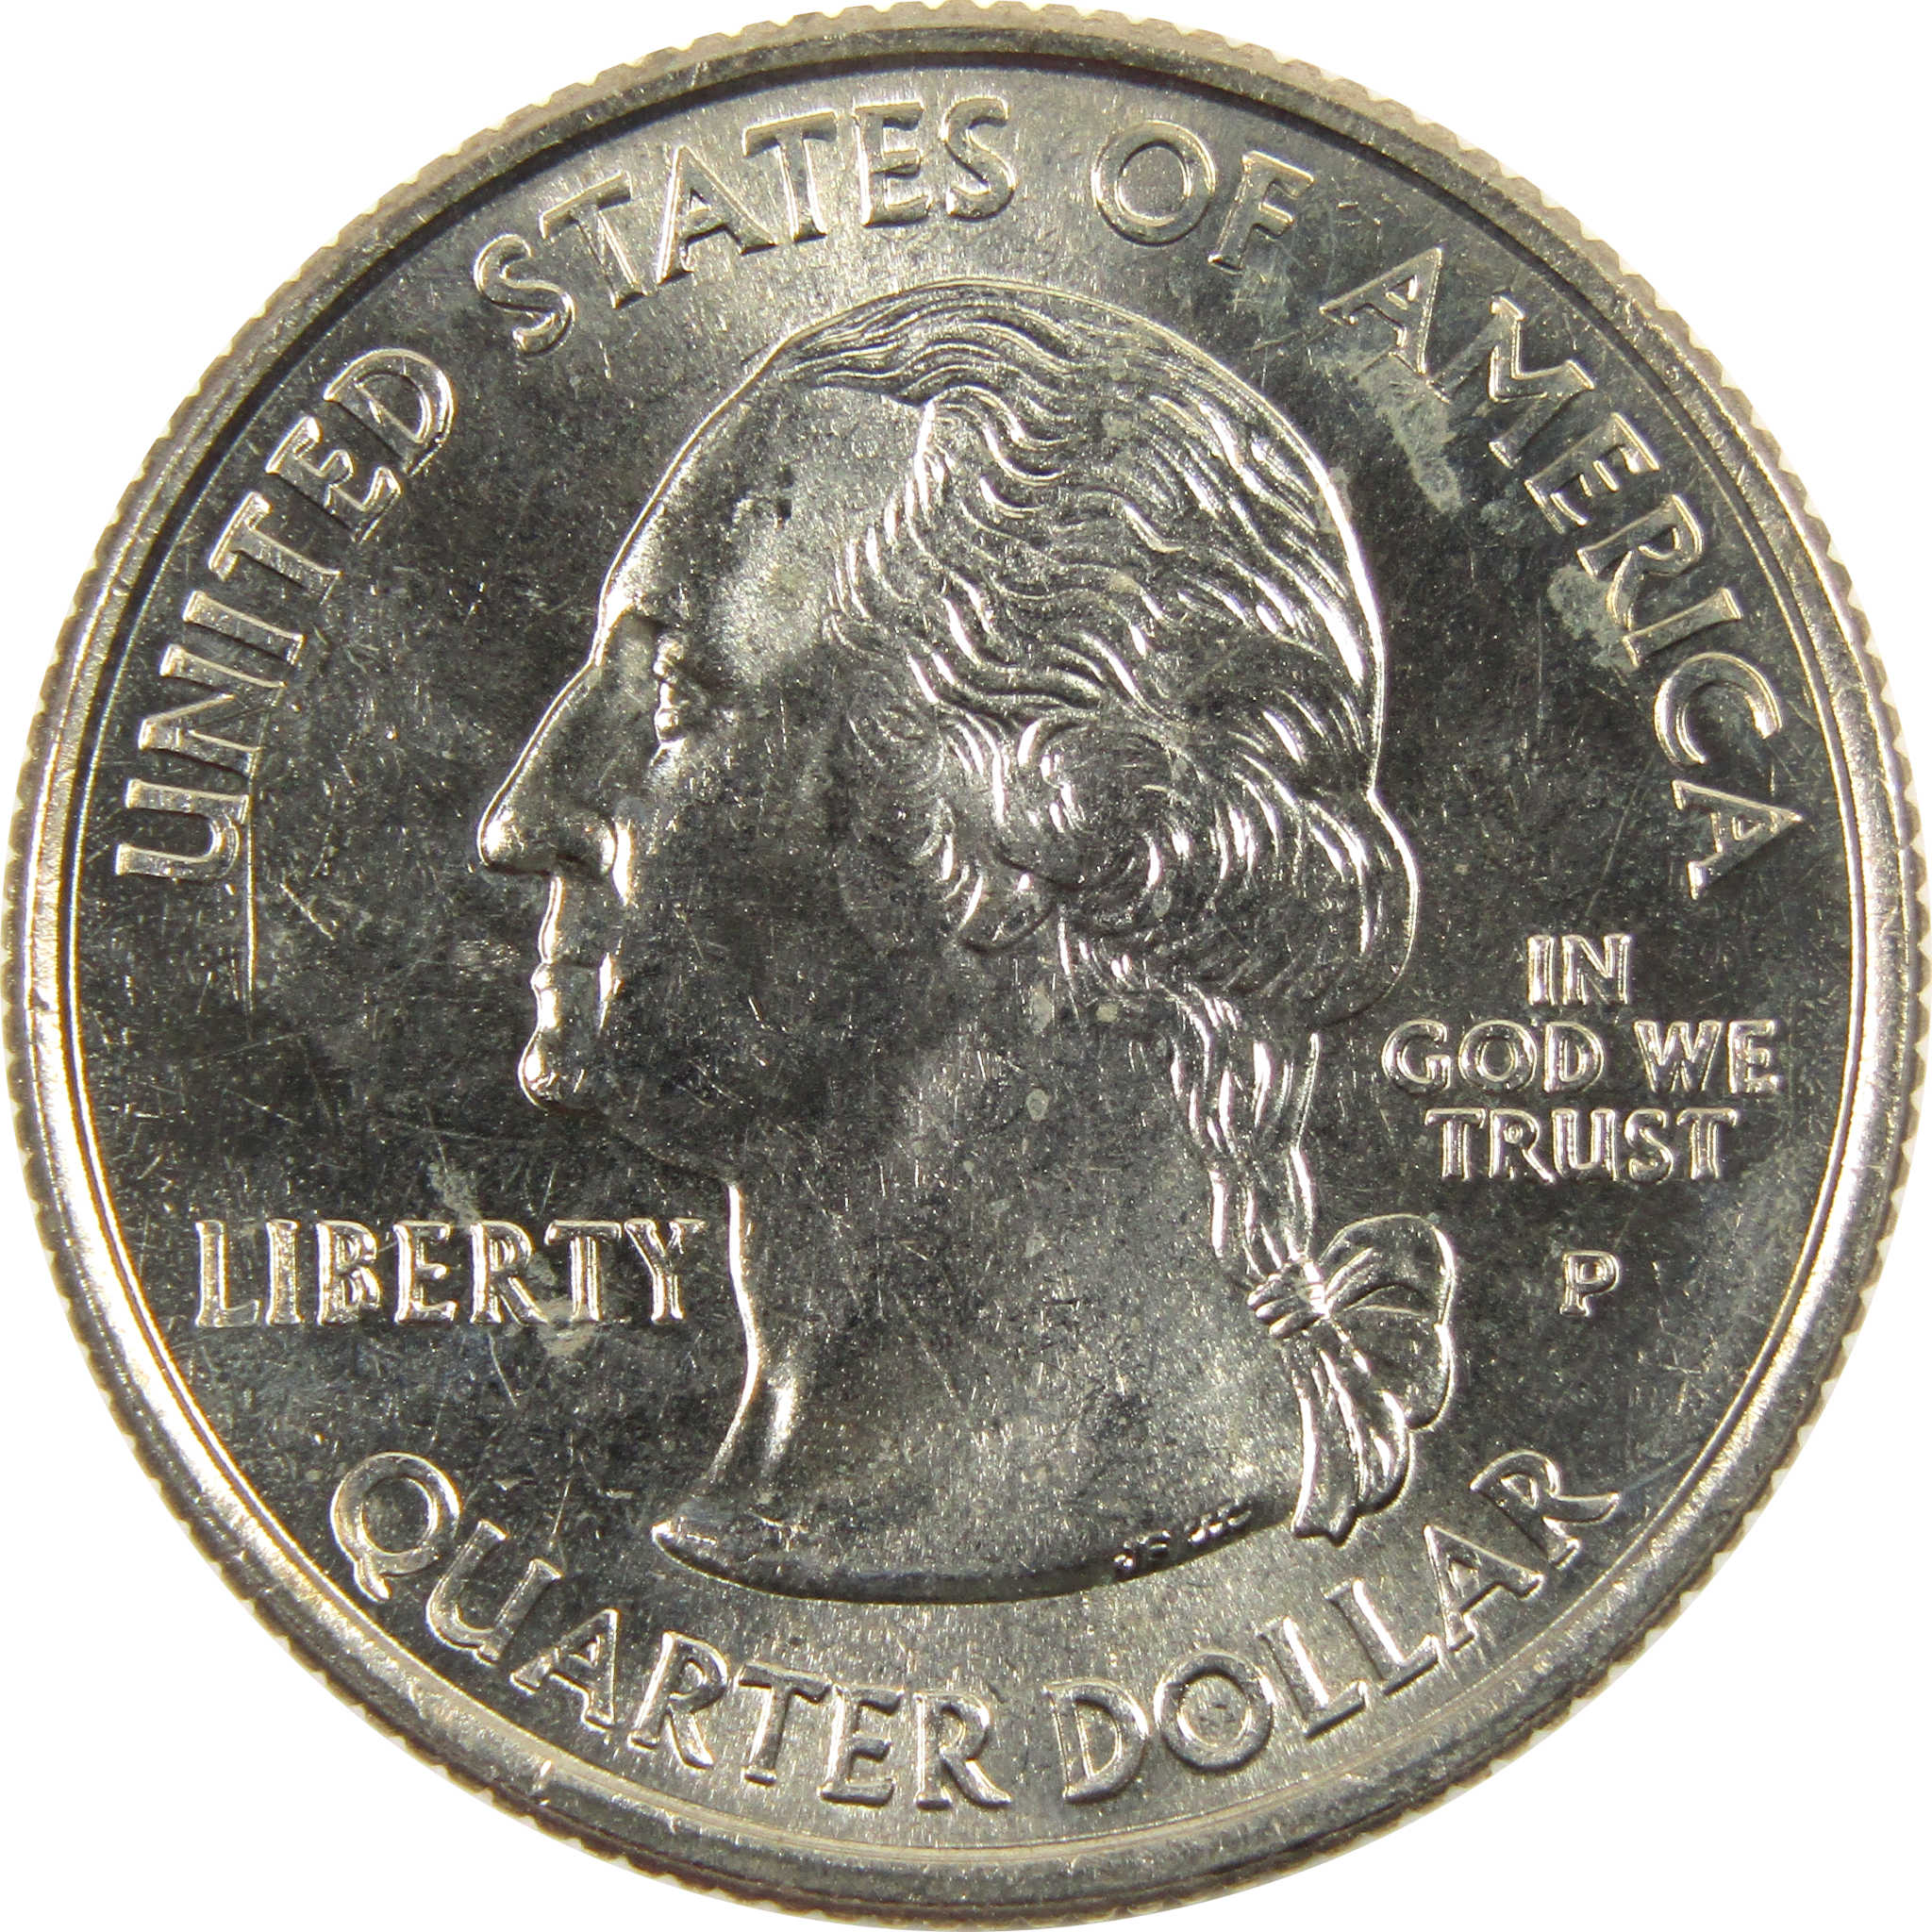 2008 P Alaska State Quarter BU Uncirculated Clad 25c Coin